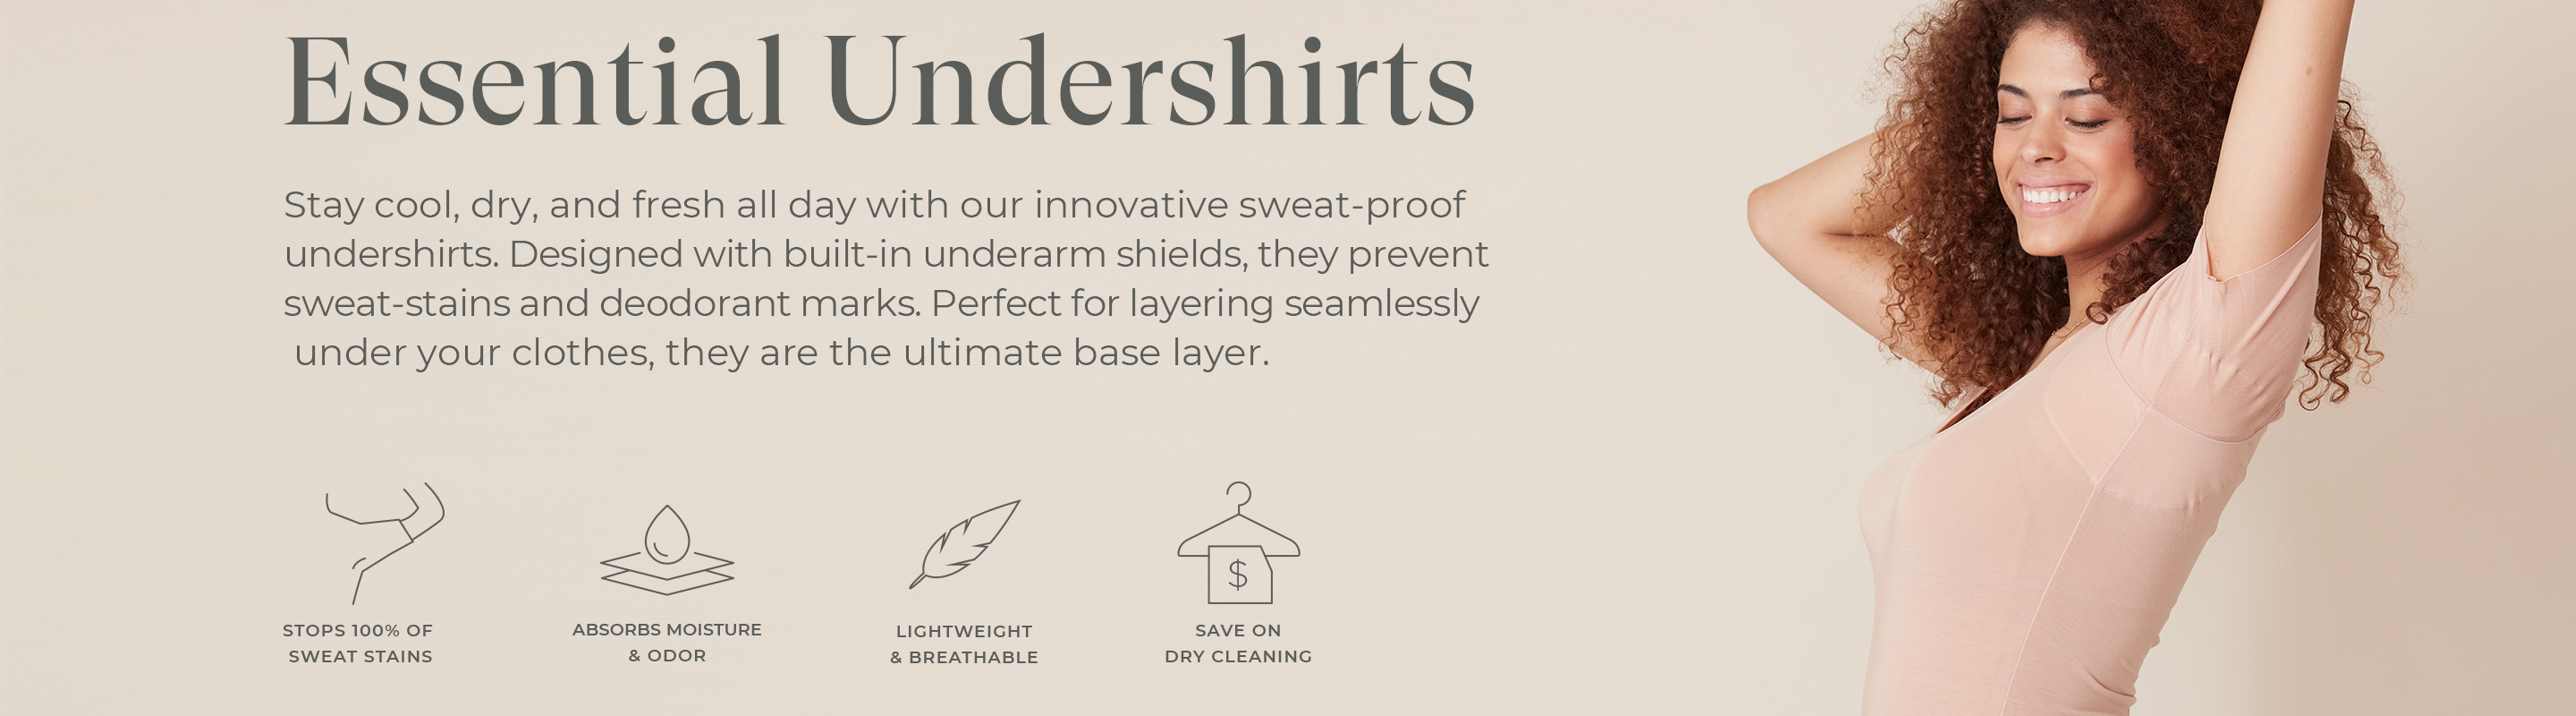 Essential Undershirts